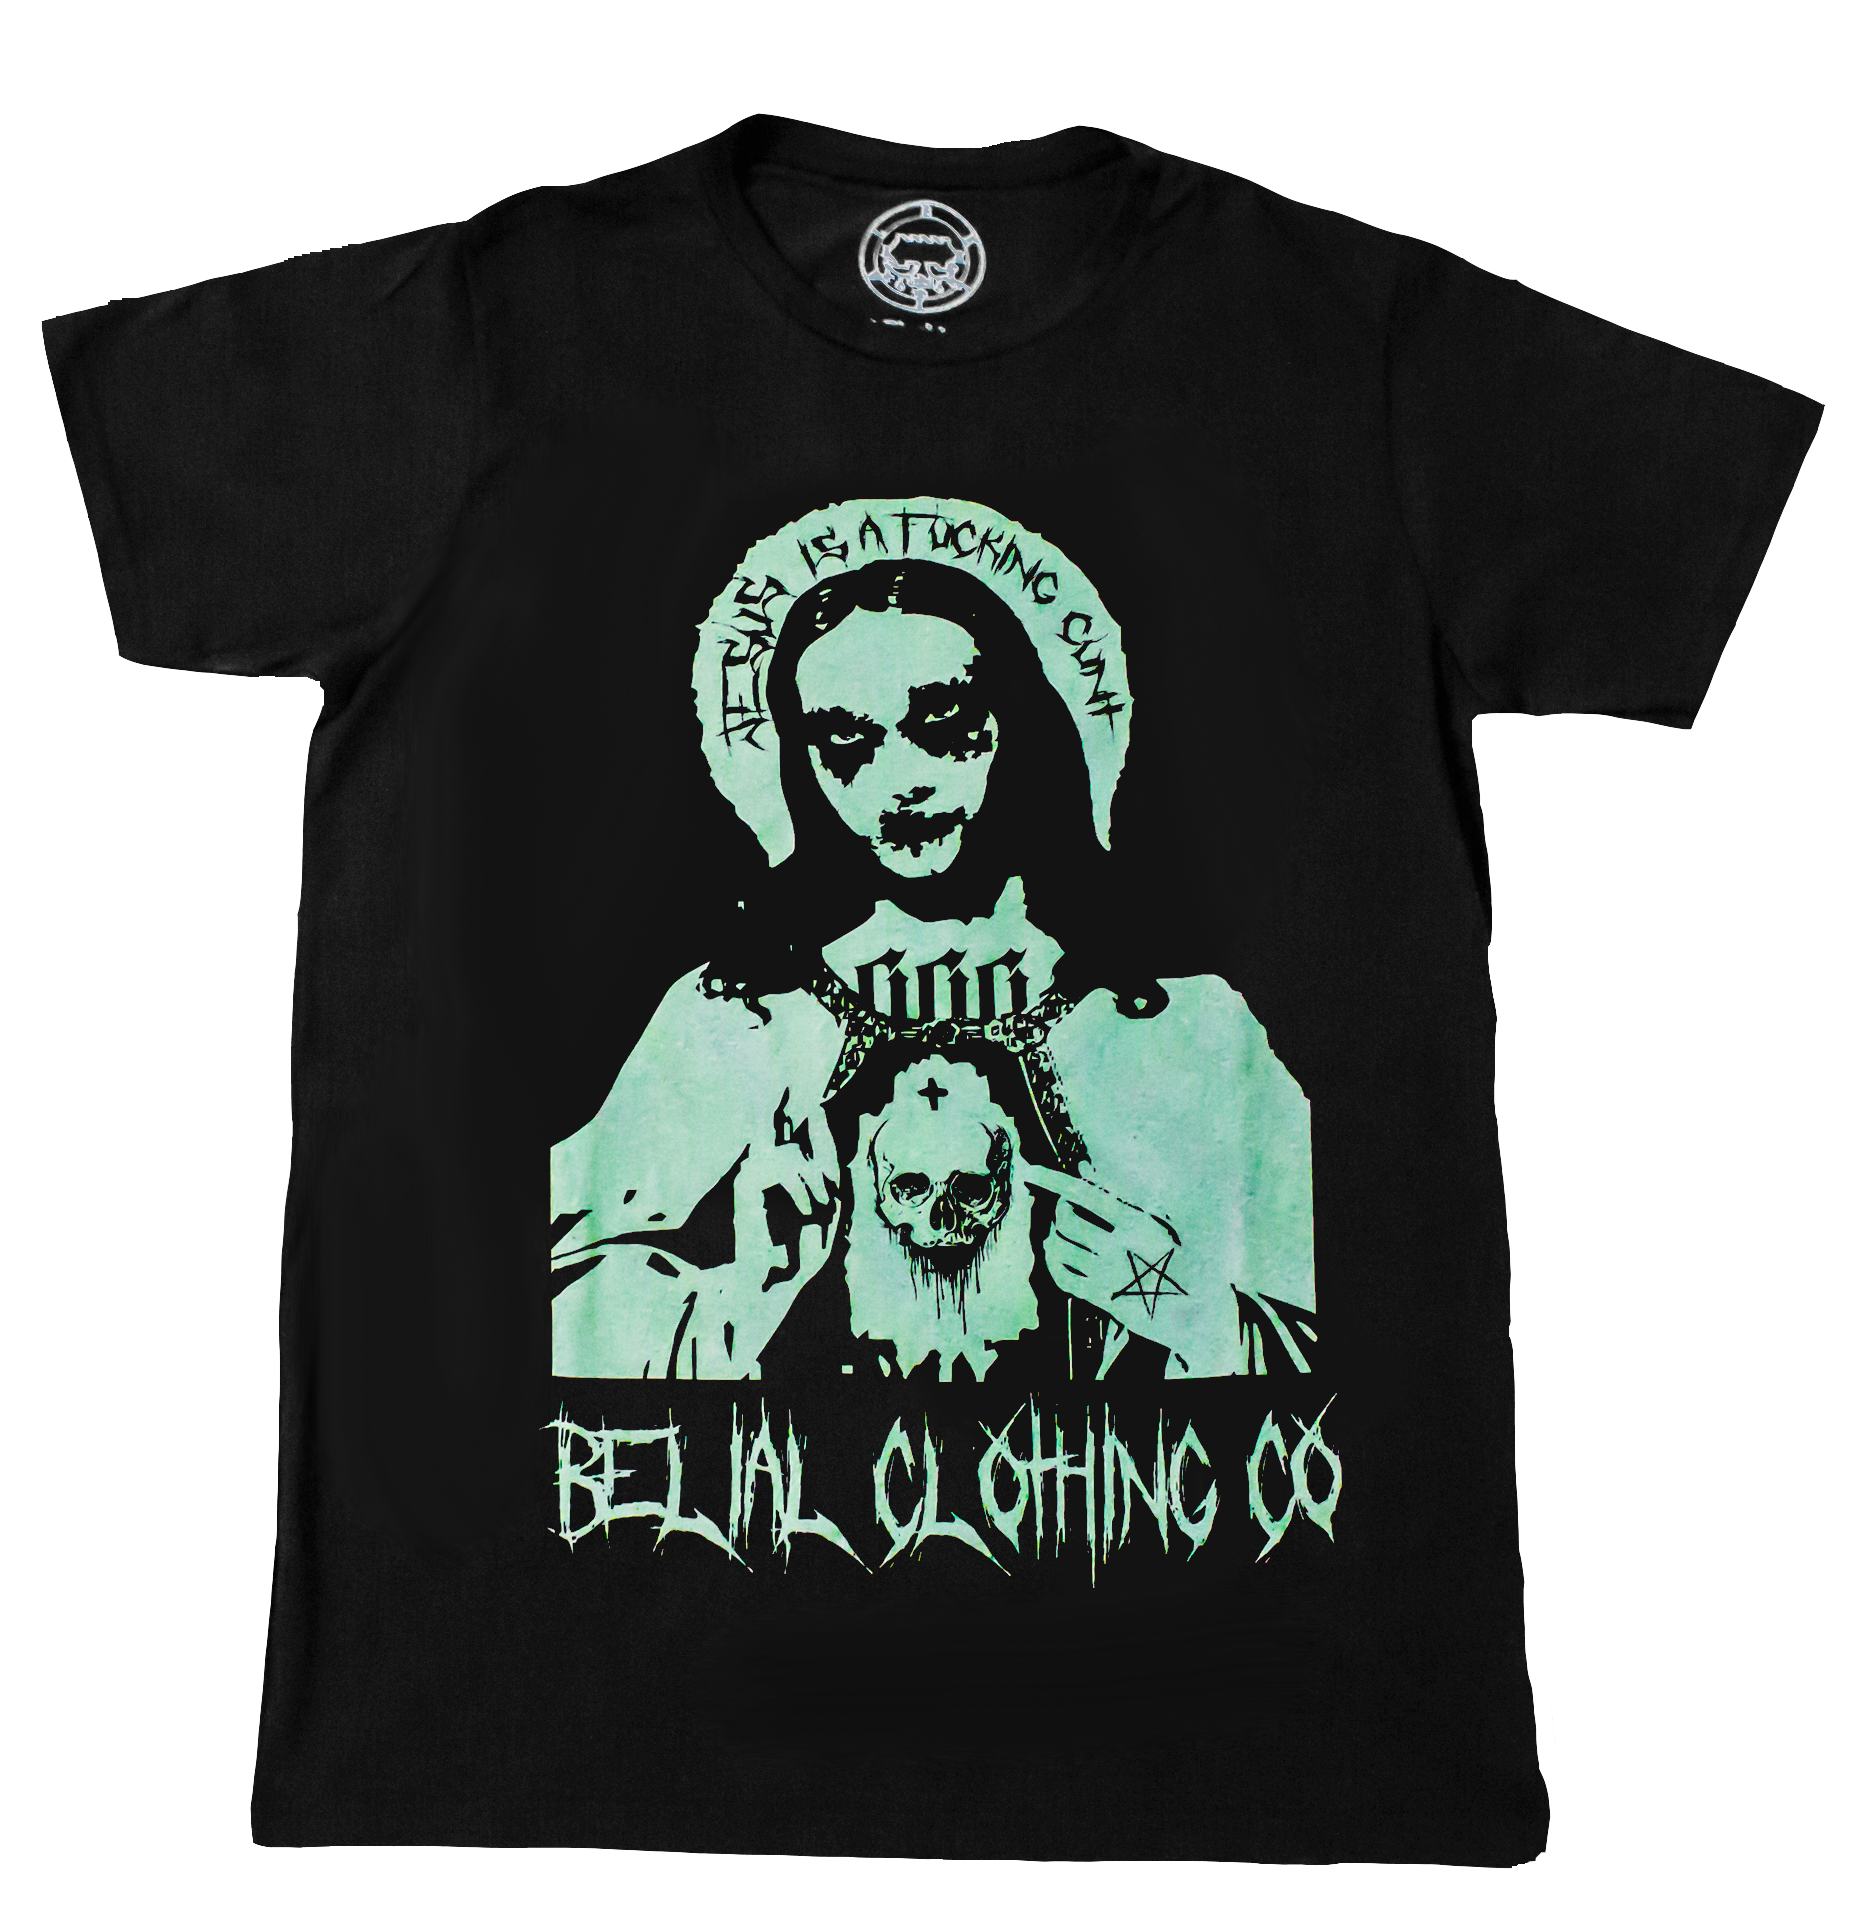 Fuck Jesus T-shirt Occult Satanic Belial Clothing 